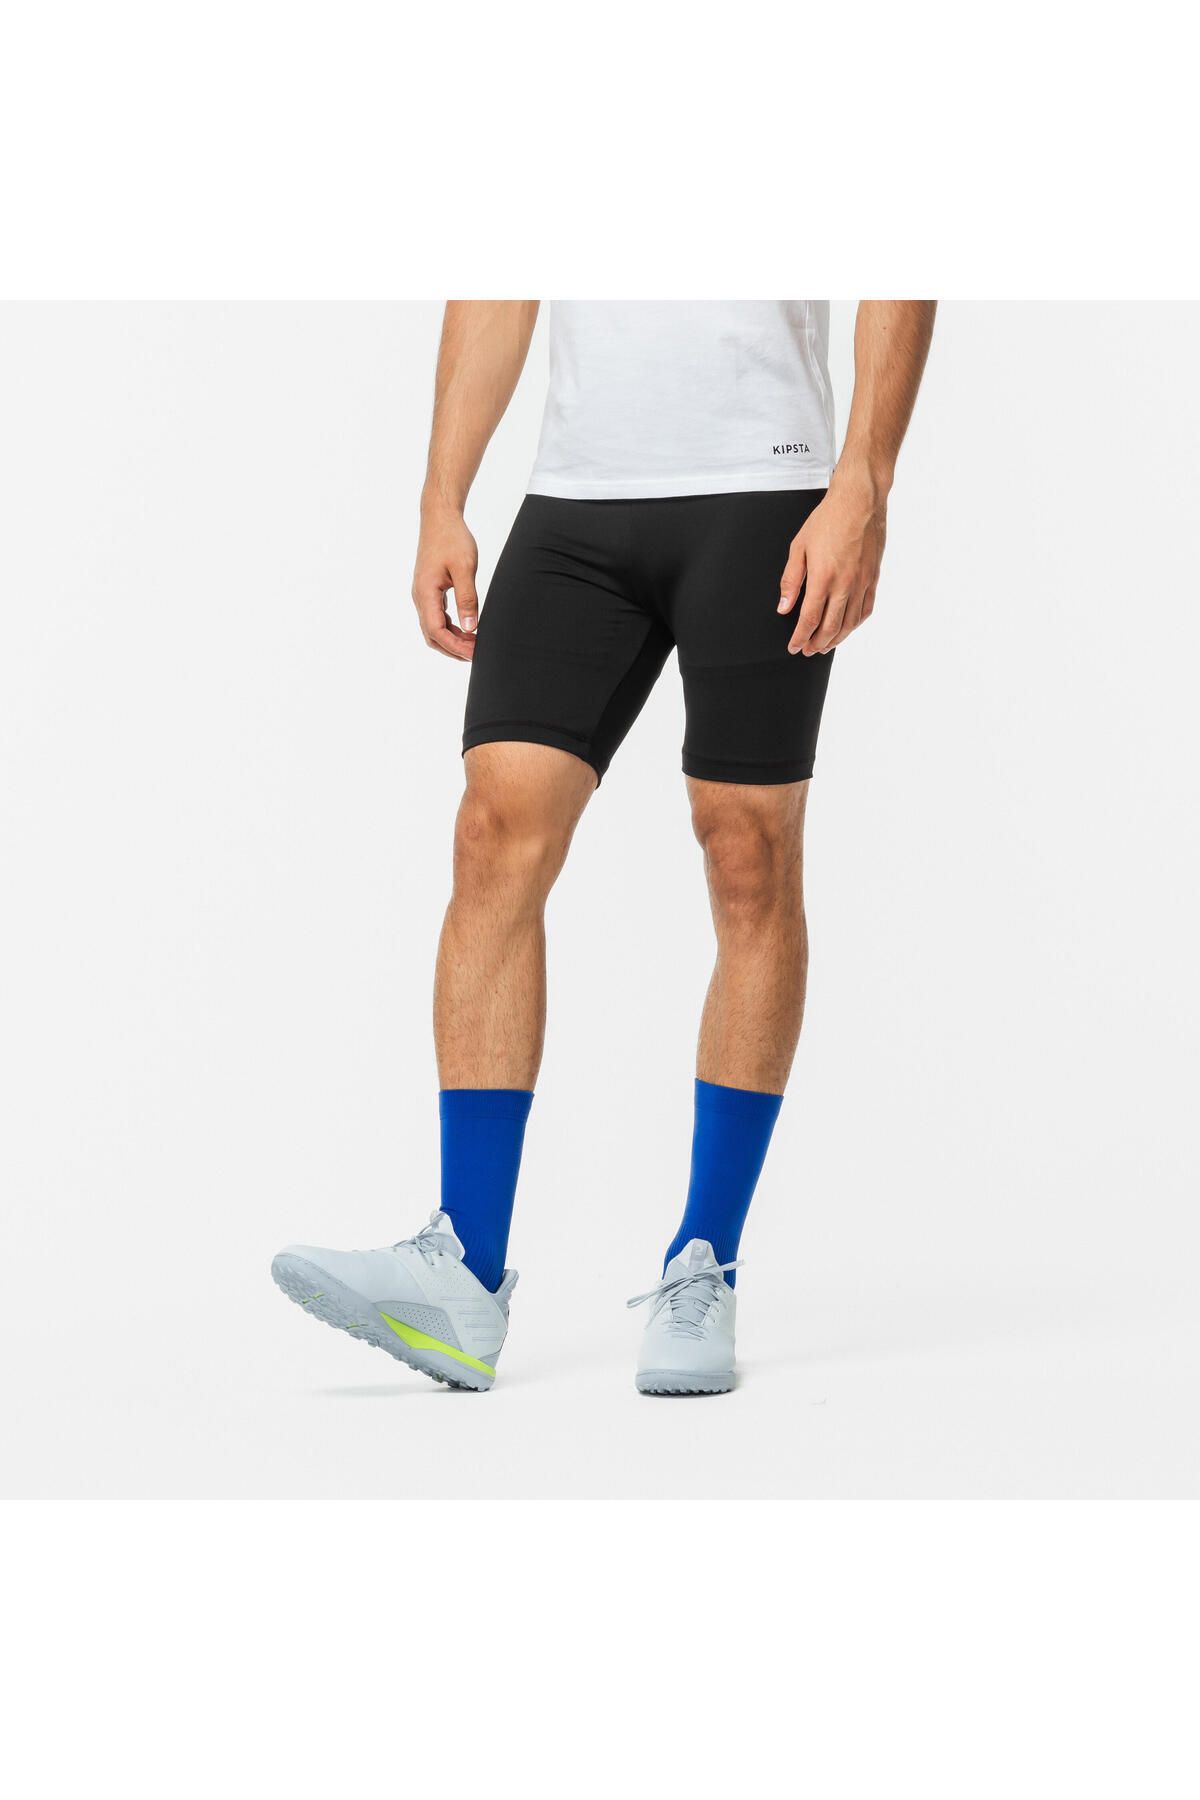 Decathlon Kipsta Football Shorts Underwear - Black - Adult - Keepcomfort  100 - Trendyol